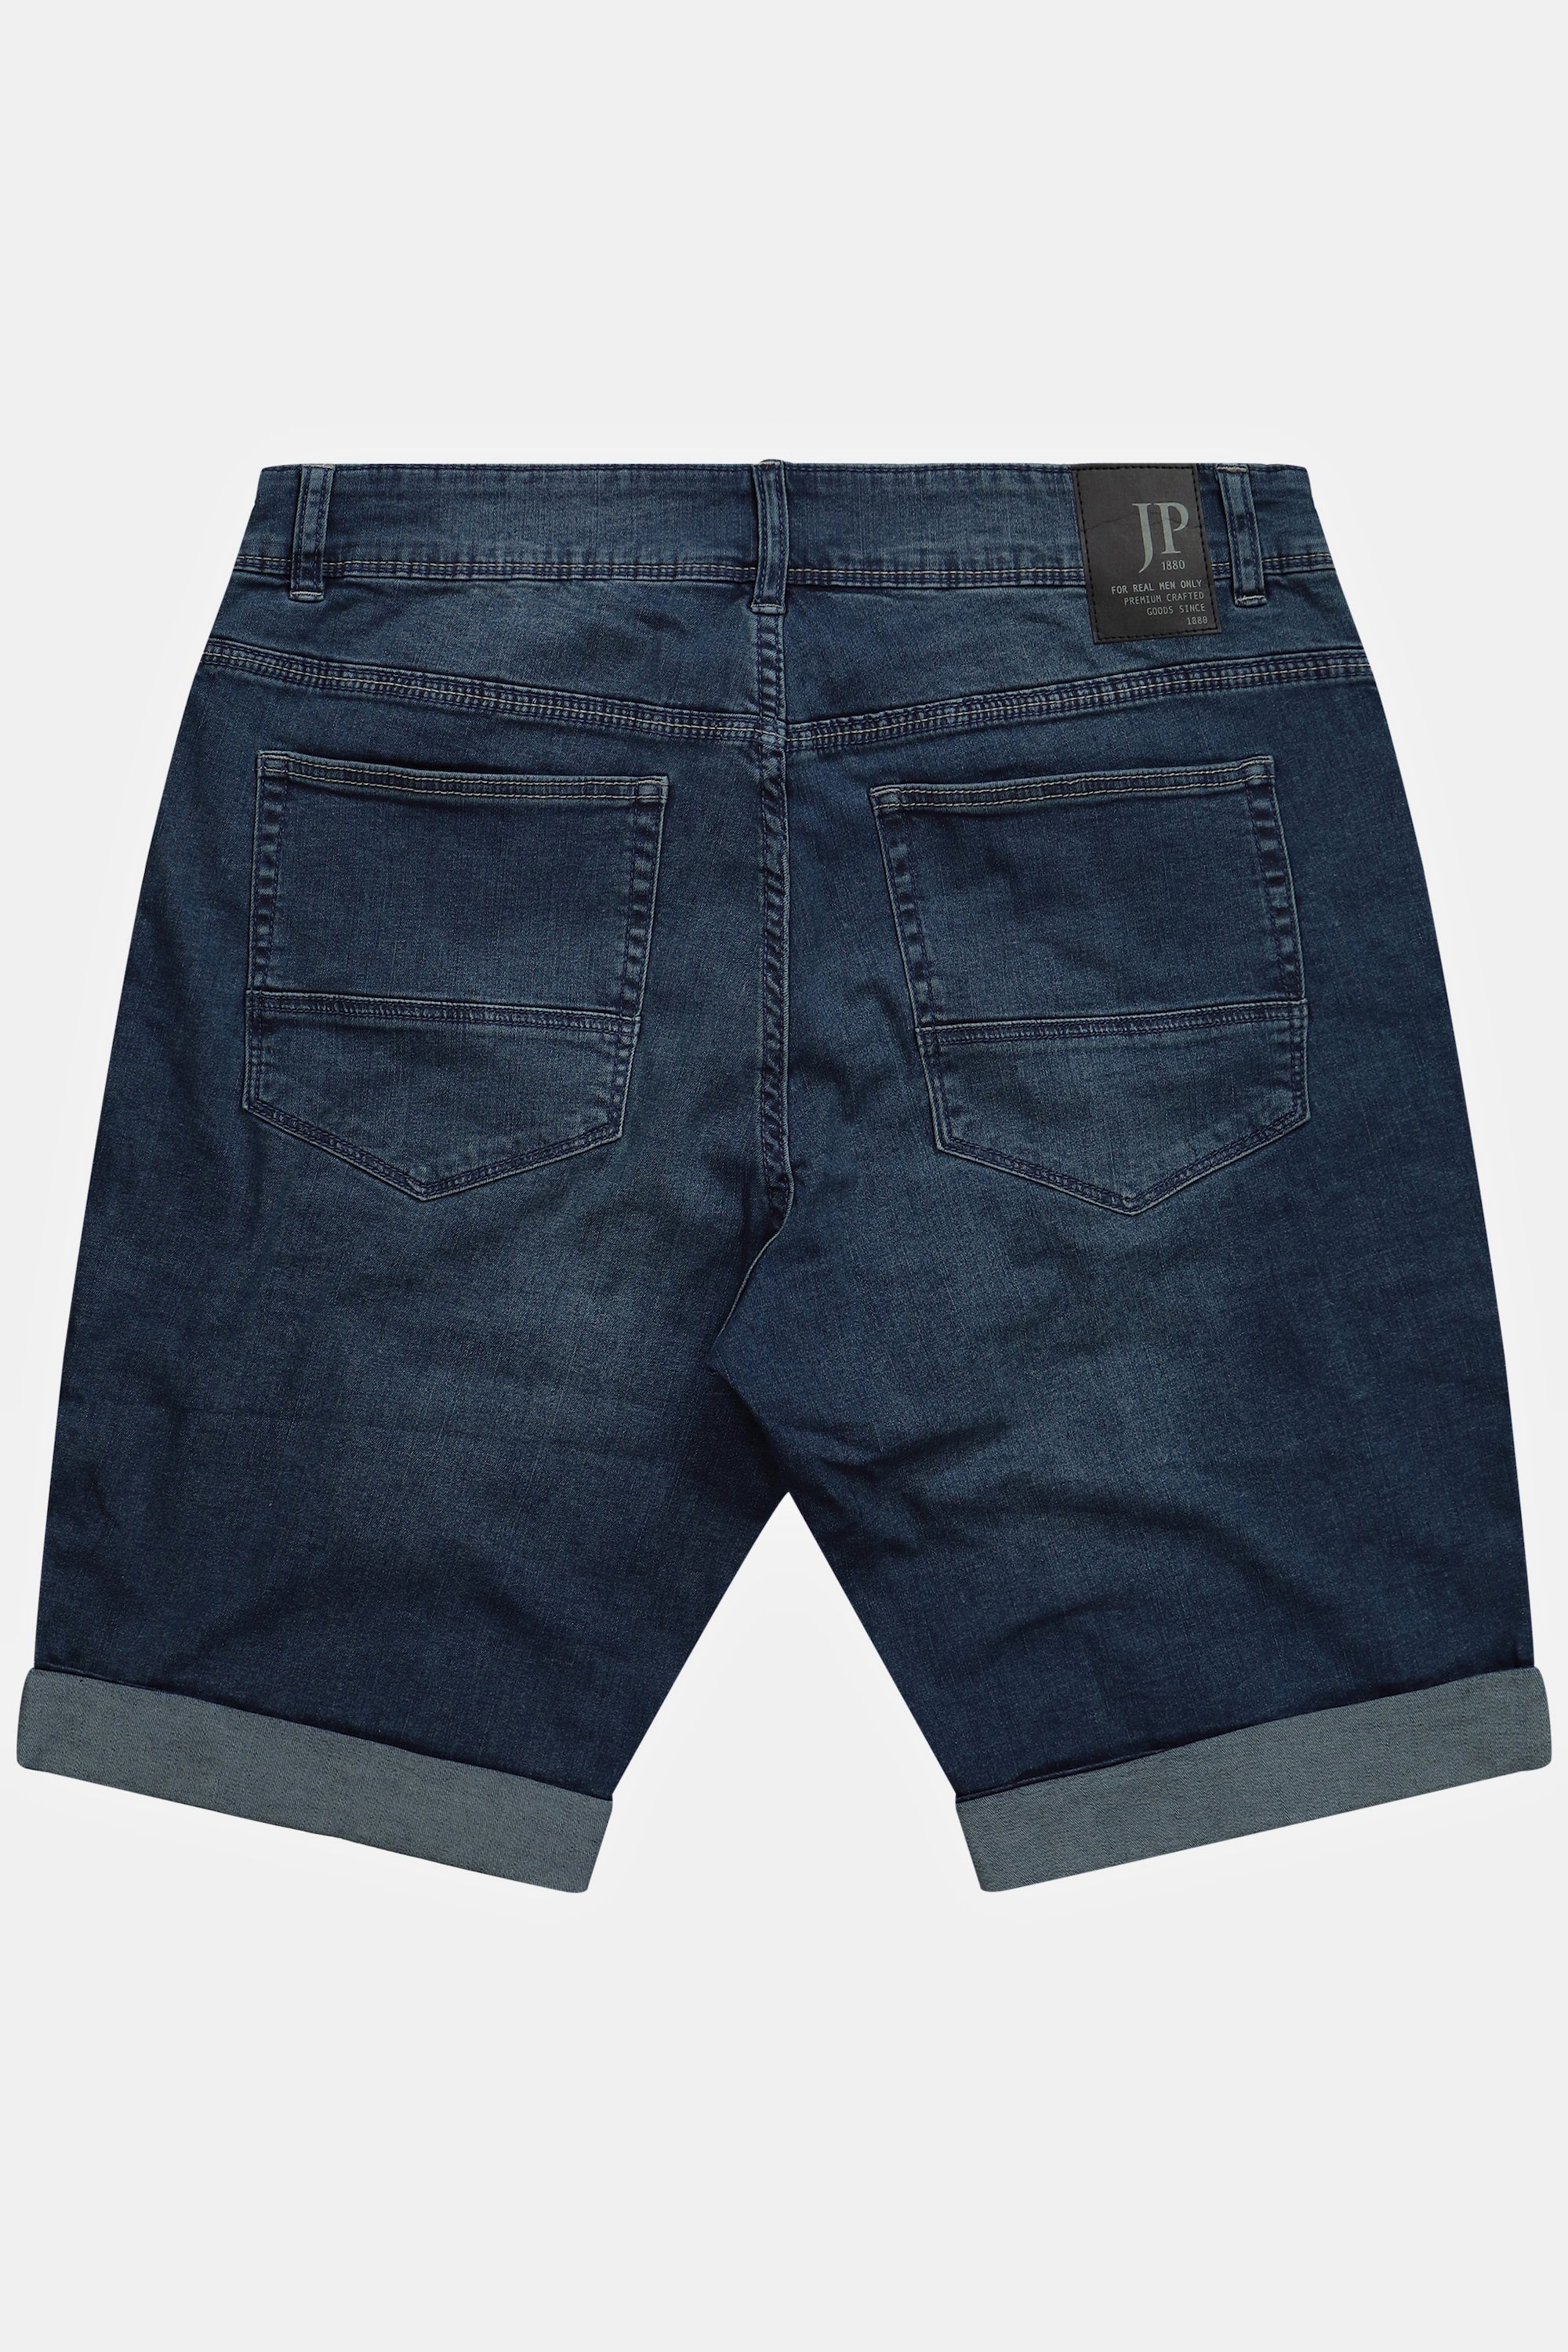 JP1880 Jeansbermudas Lightweight-Jeansbermuda Regular Fit blue dark denim 5-Pocket